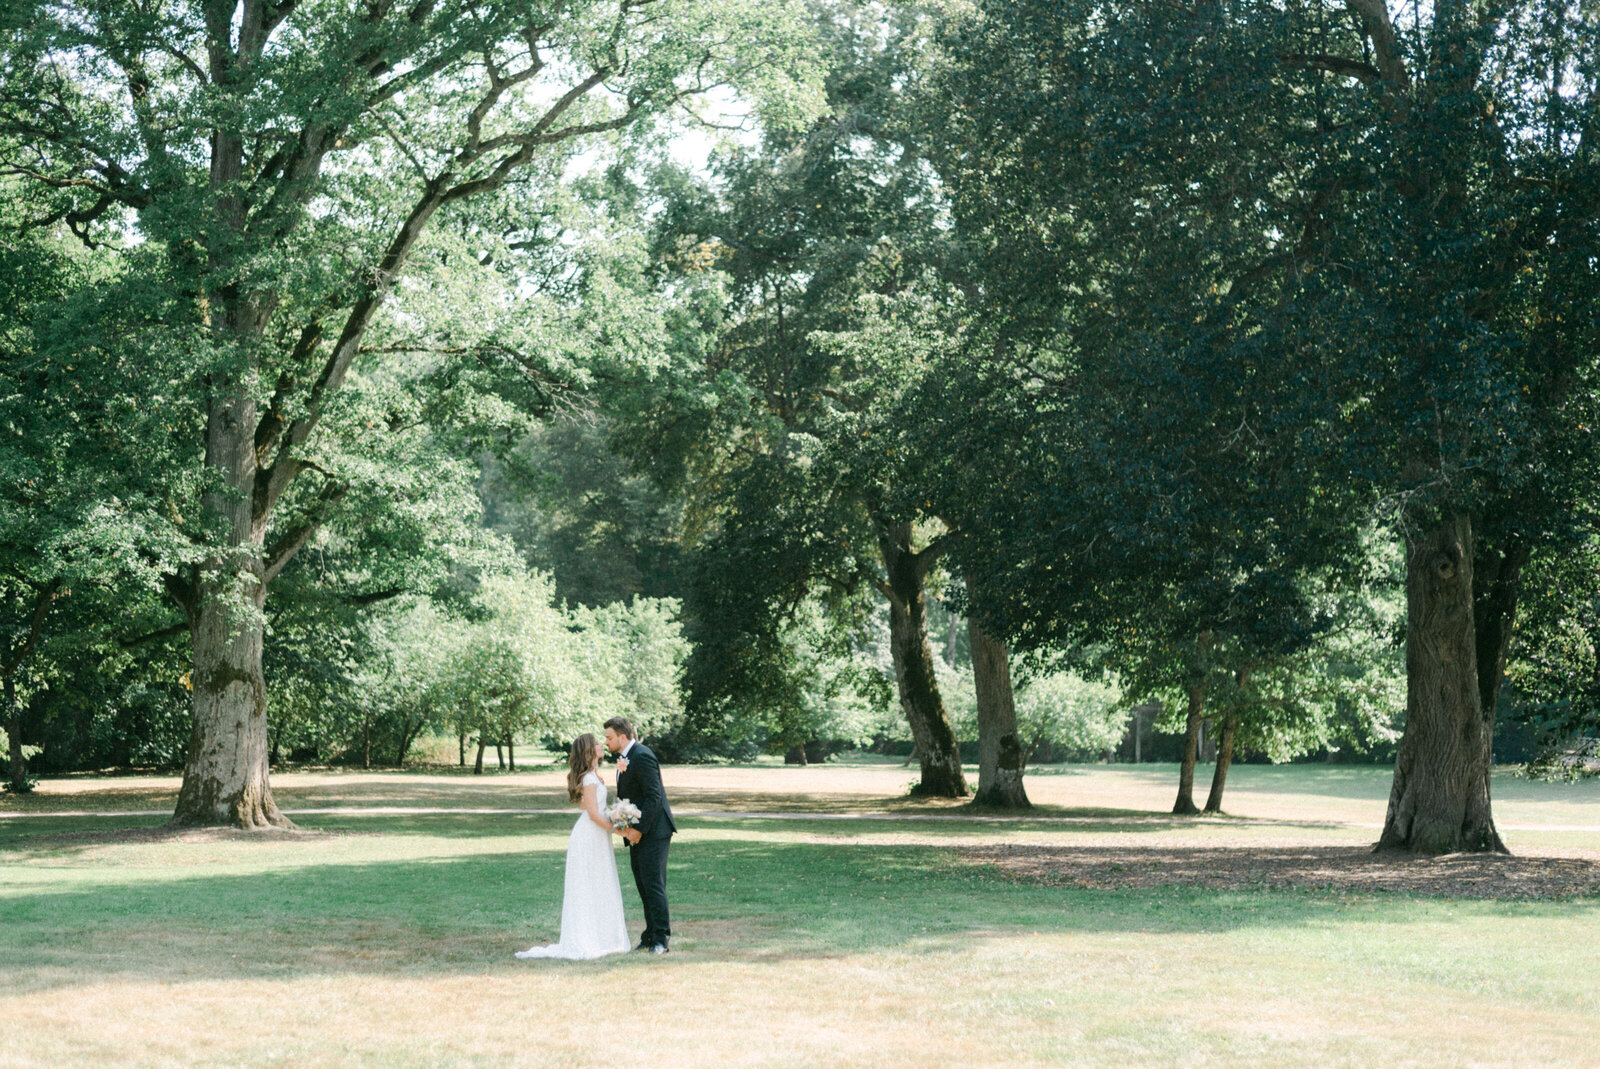 A wedding couple in a park in the summer during their wedding photography with wedding photographer Hannika Gabrielsson.